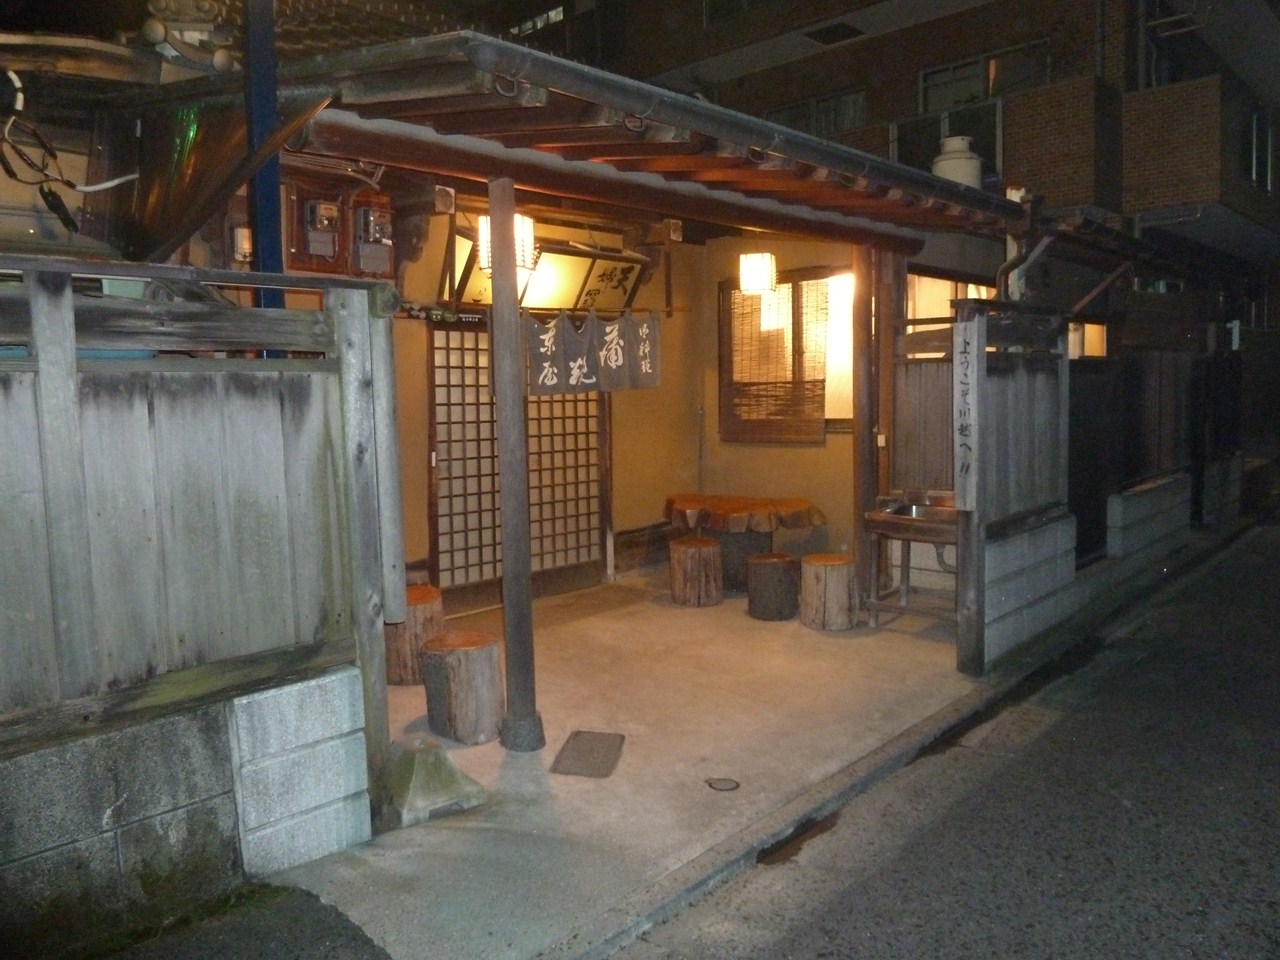 http://www.shintoko.jp/engblog/archives/images/2011/11/111105_azumaya140.jpg